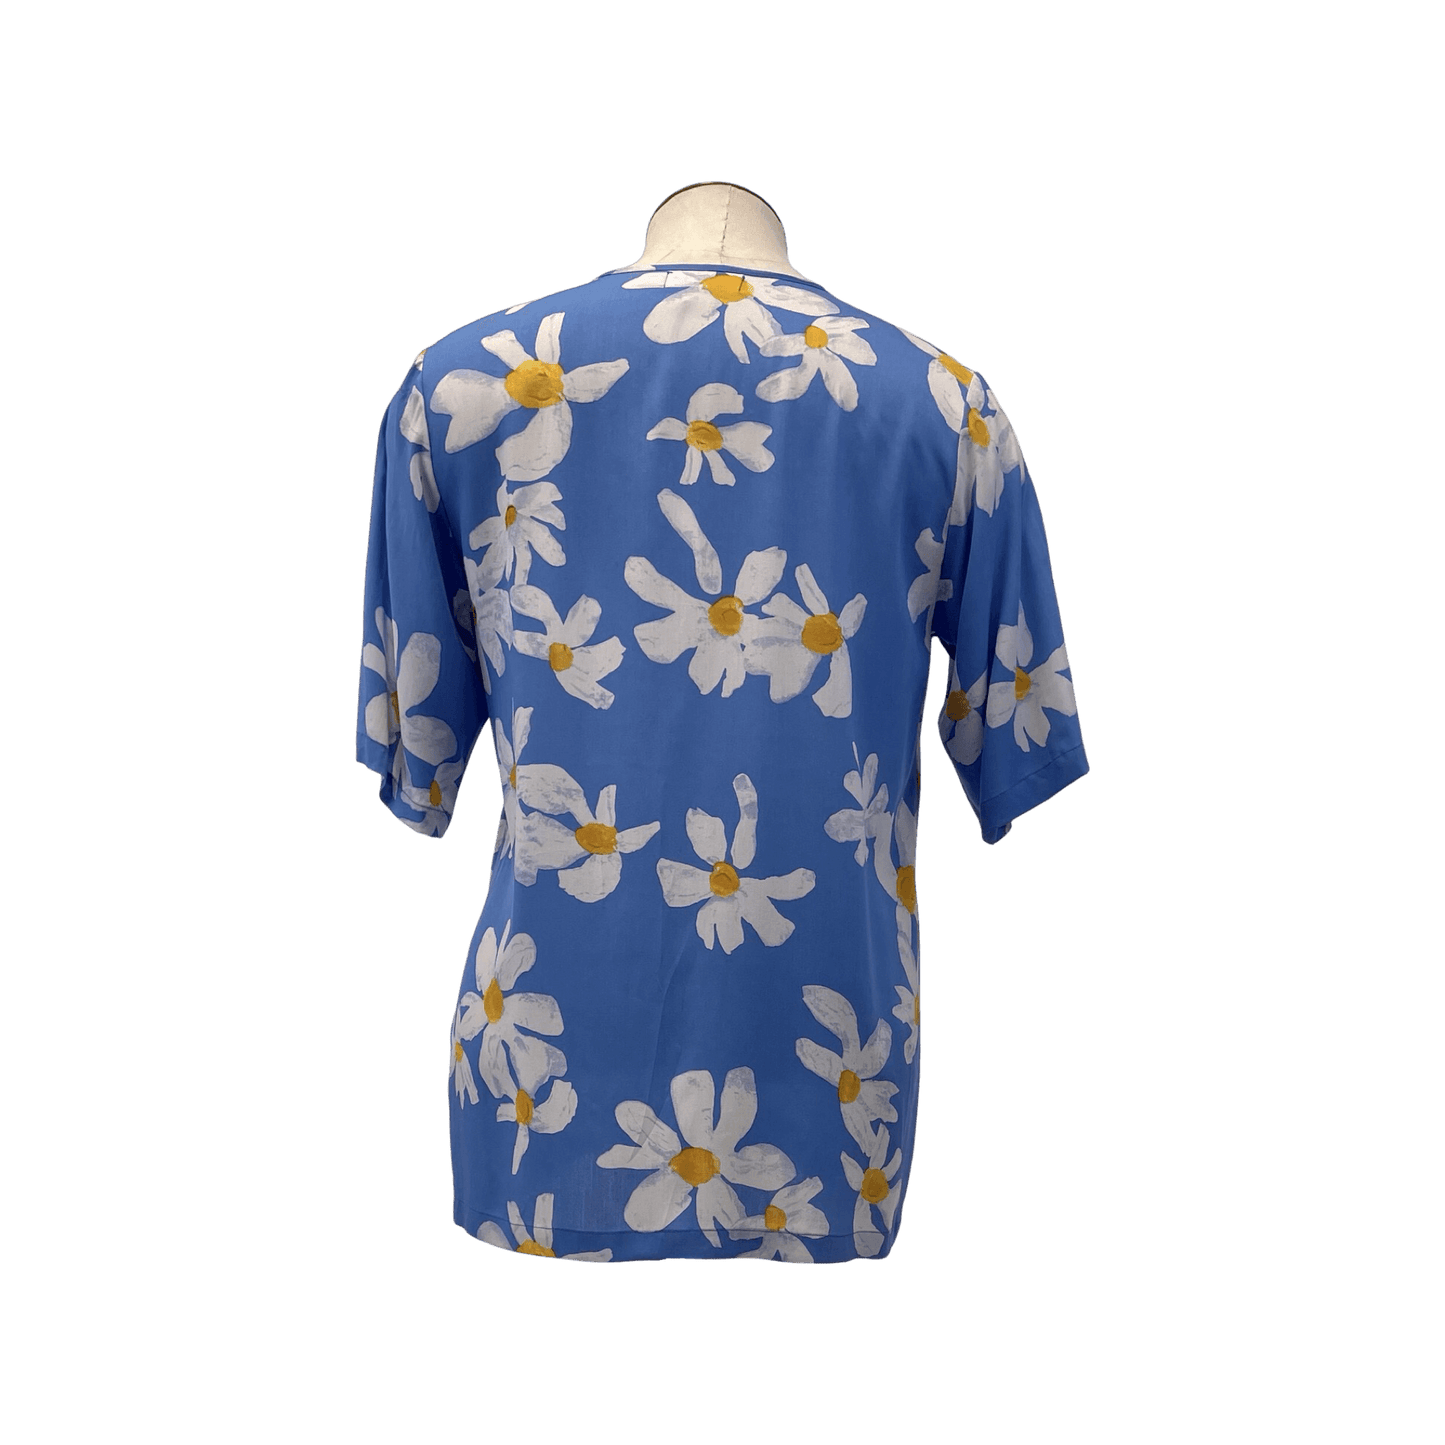 Bloom Clothing NZ,FRESH DAISY TOP - Sky Blue,$189.00,